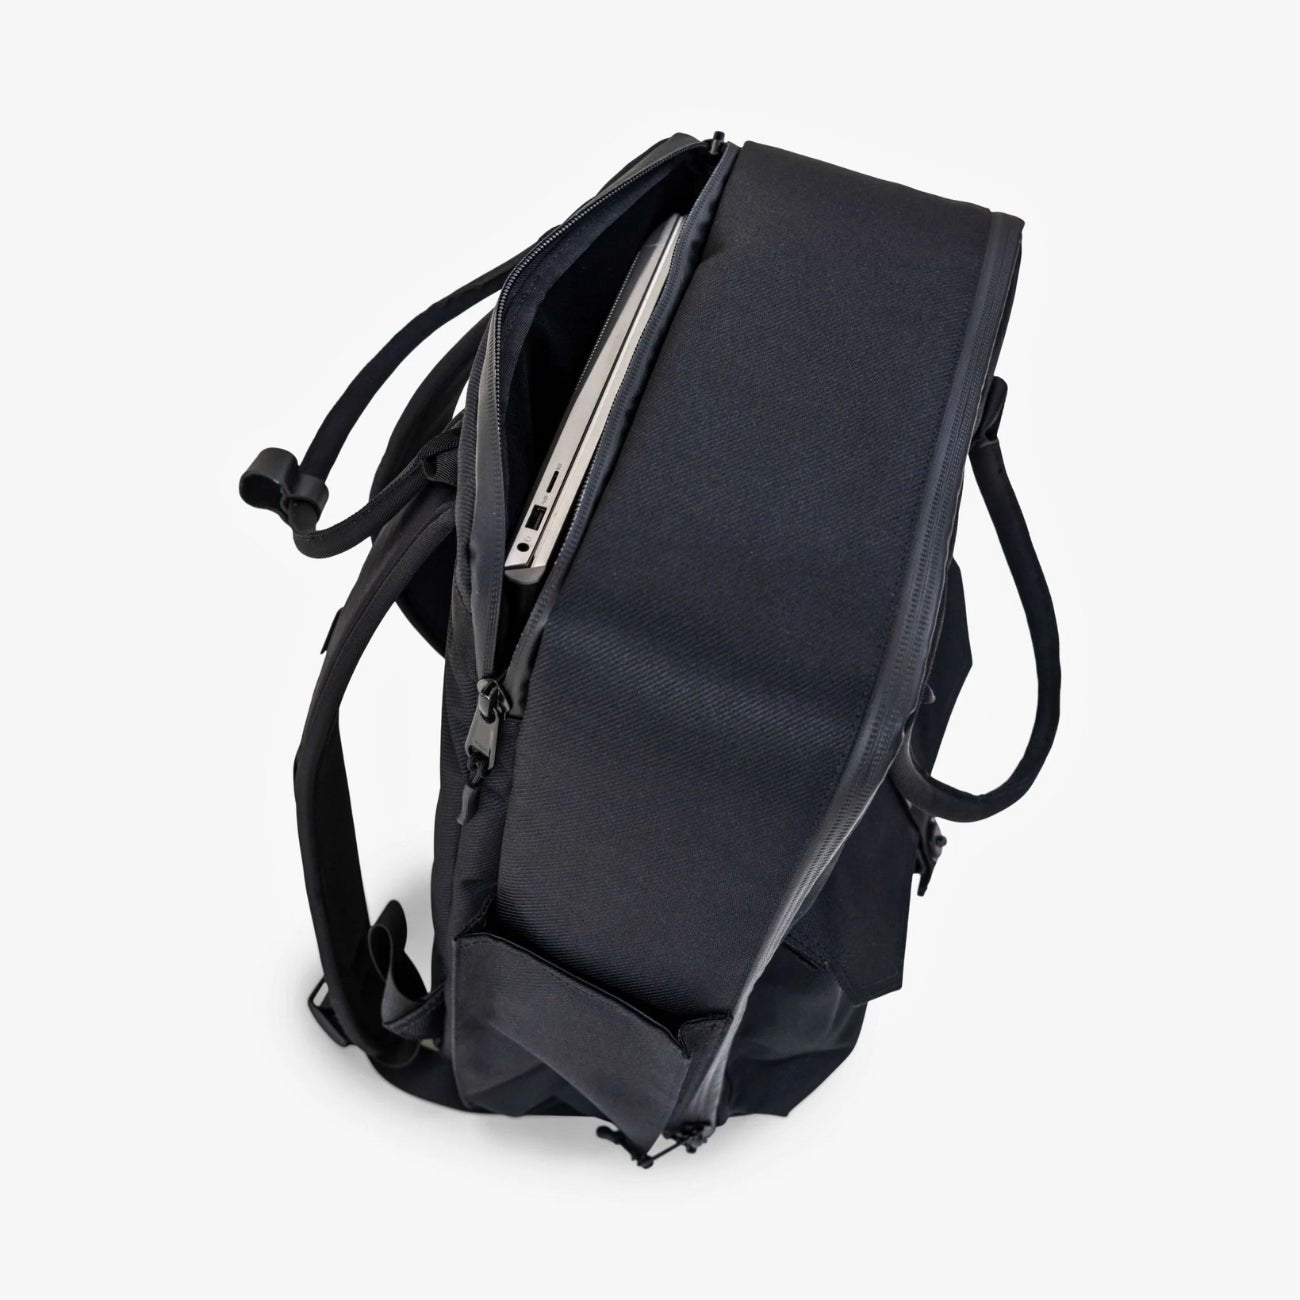 The New Sierra Backpack - Black